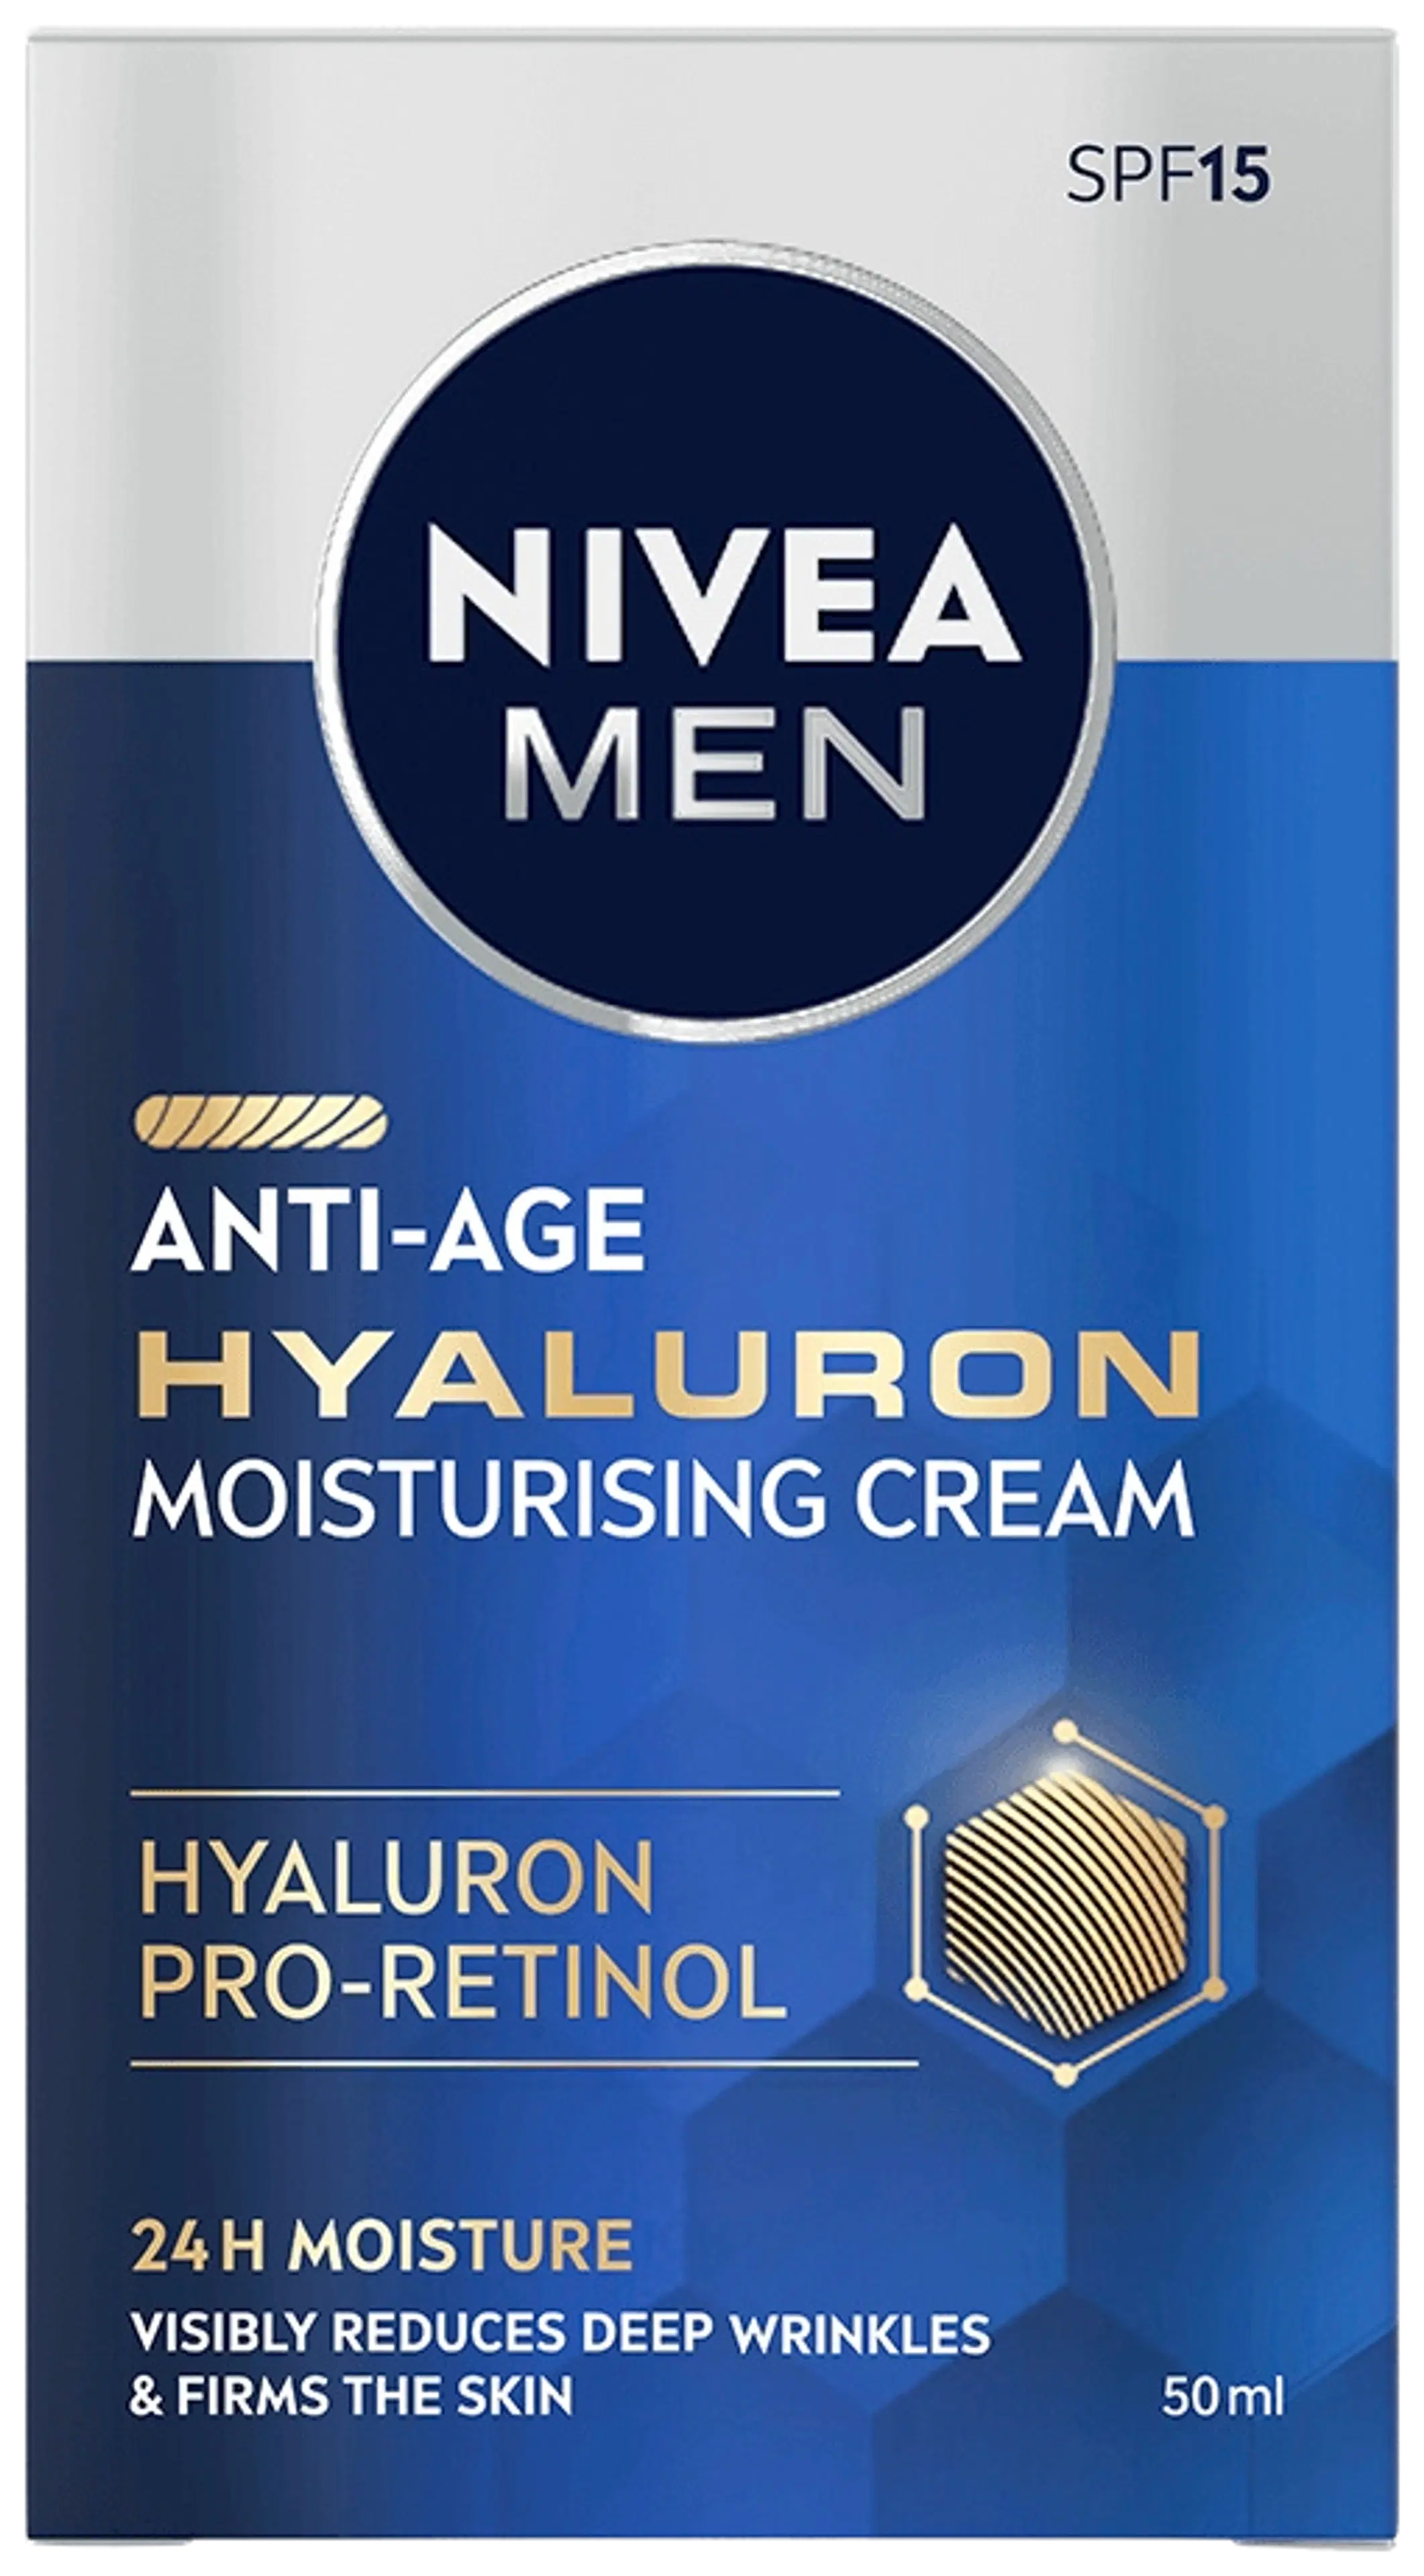 NIVEA MEN 50ml Anti-Age Hyaluron Face Moisturising Cream SPF15 -kasvovoide